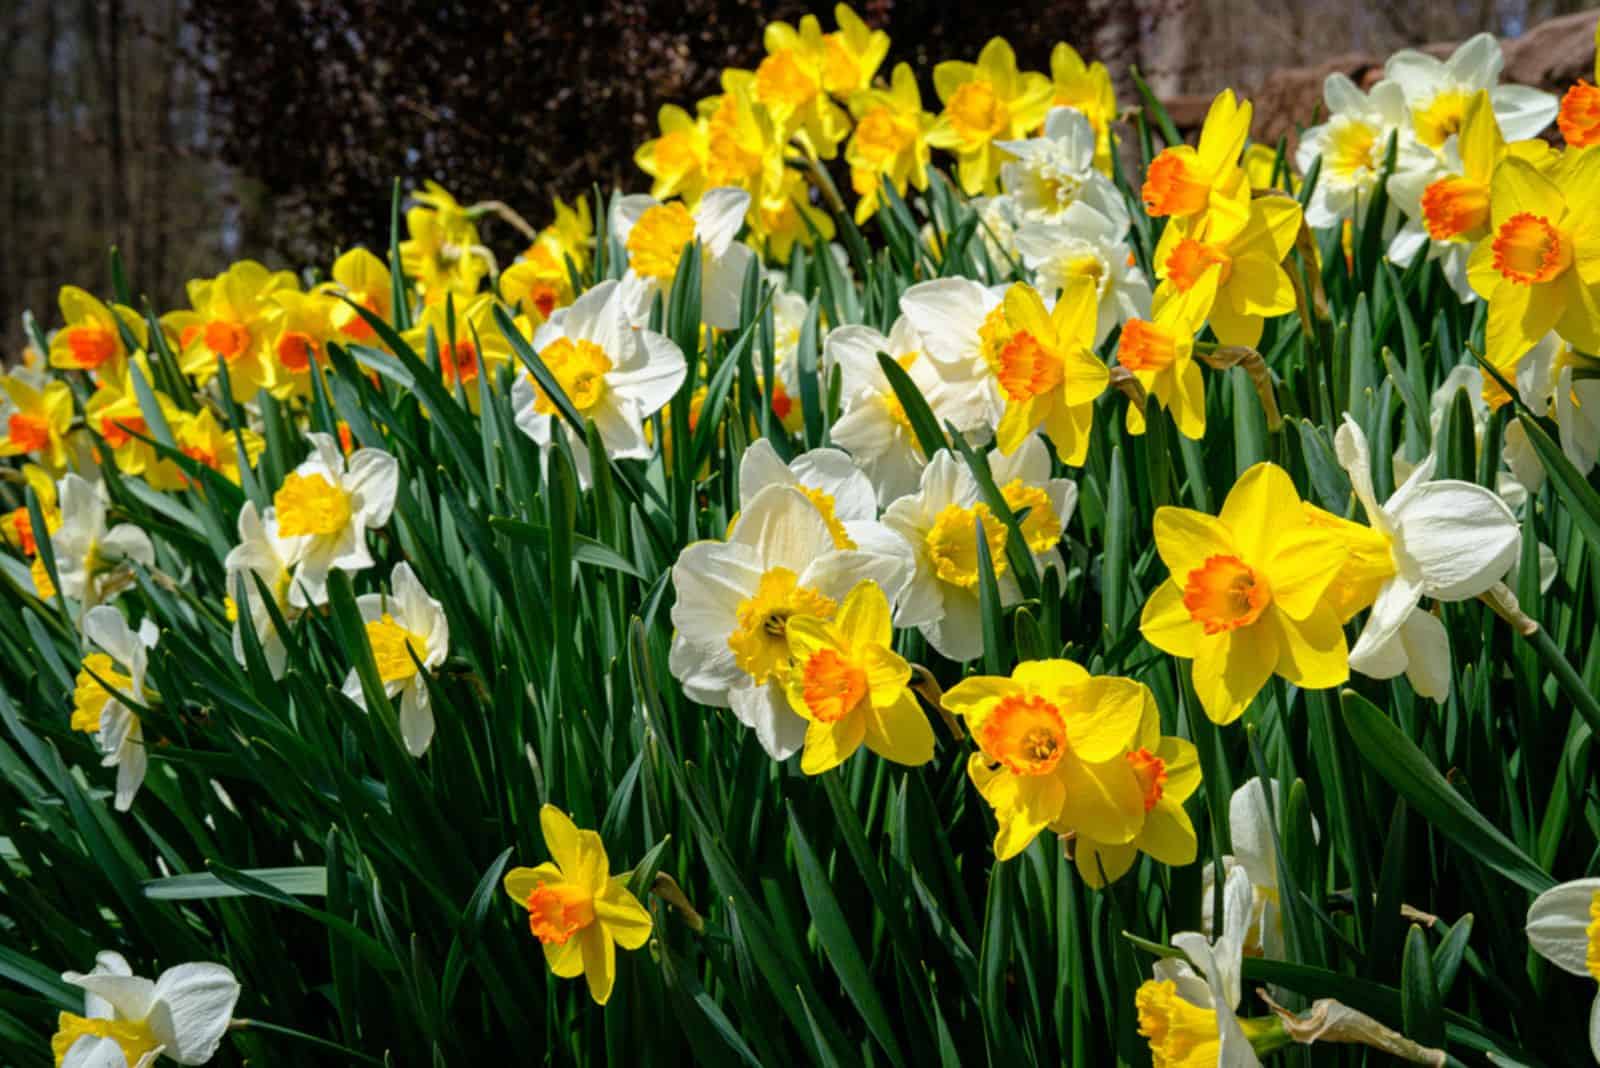 Daffodils beautiful flowers in bloom